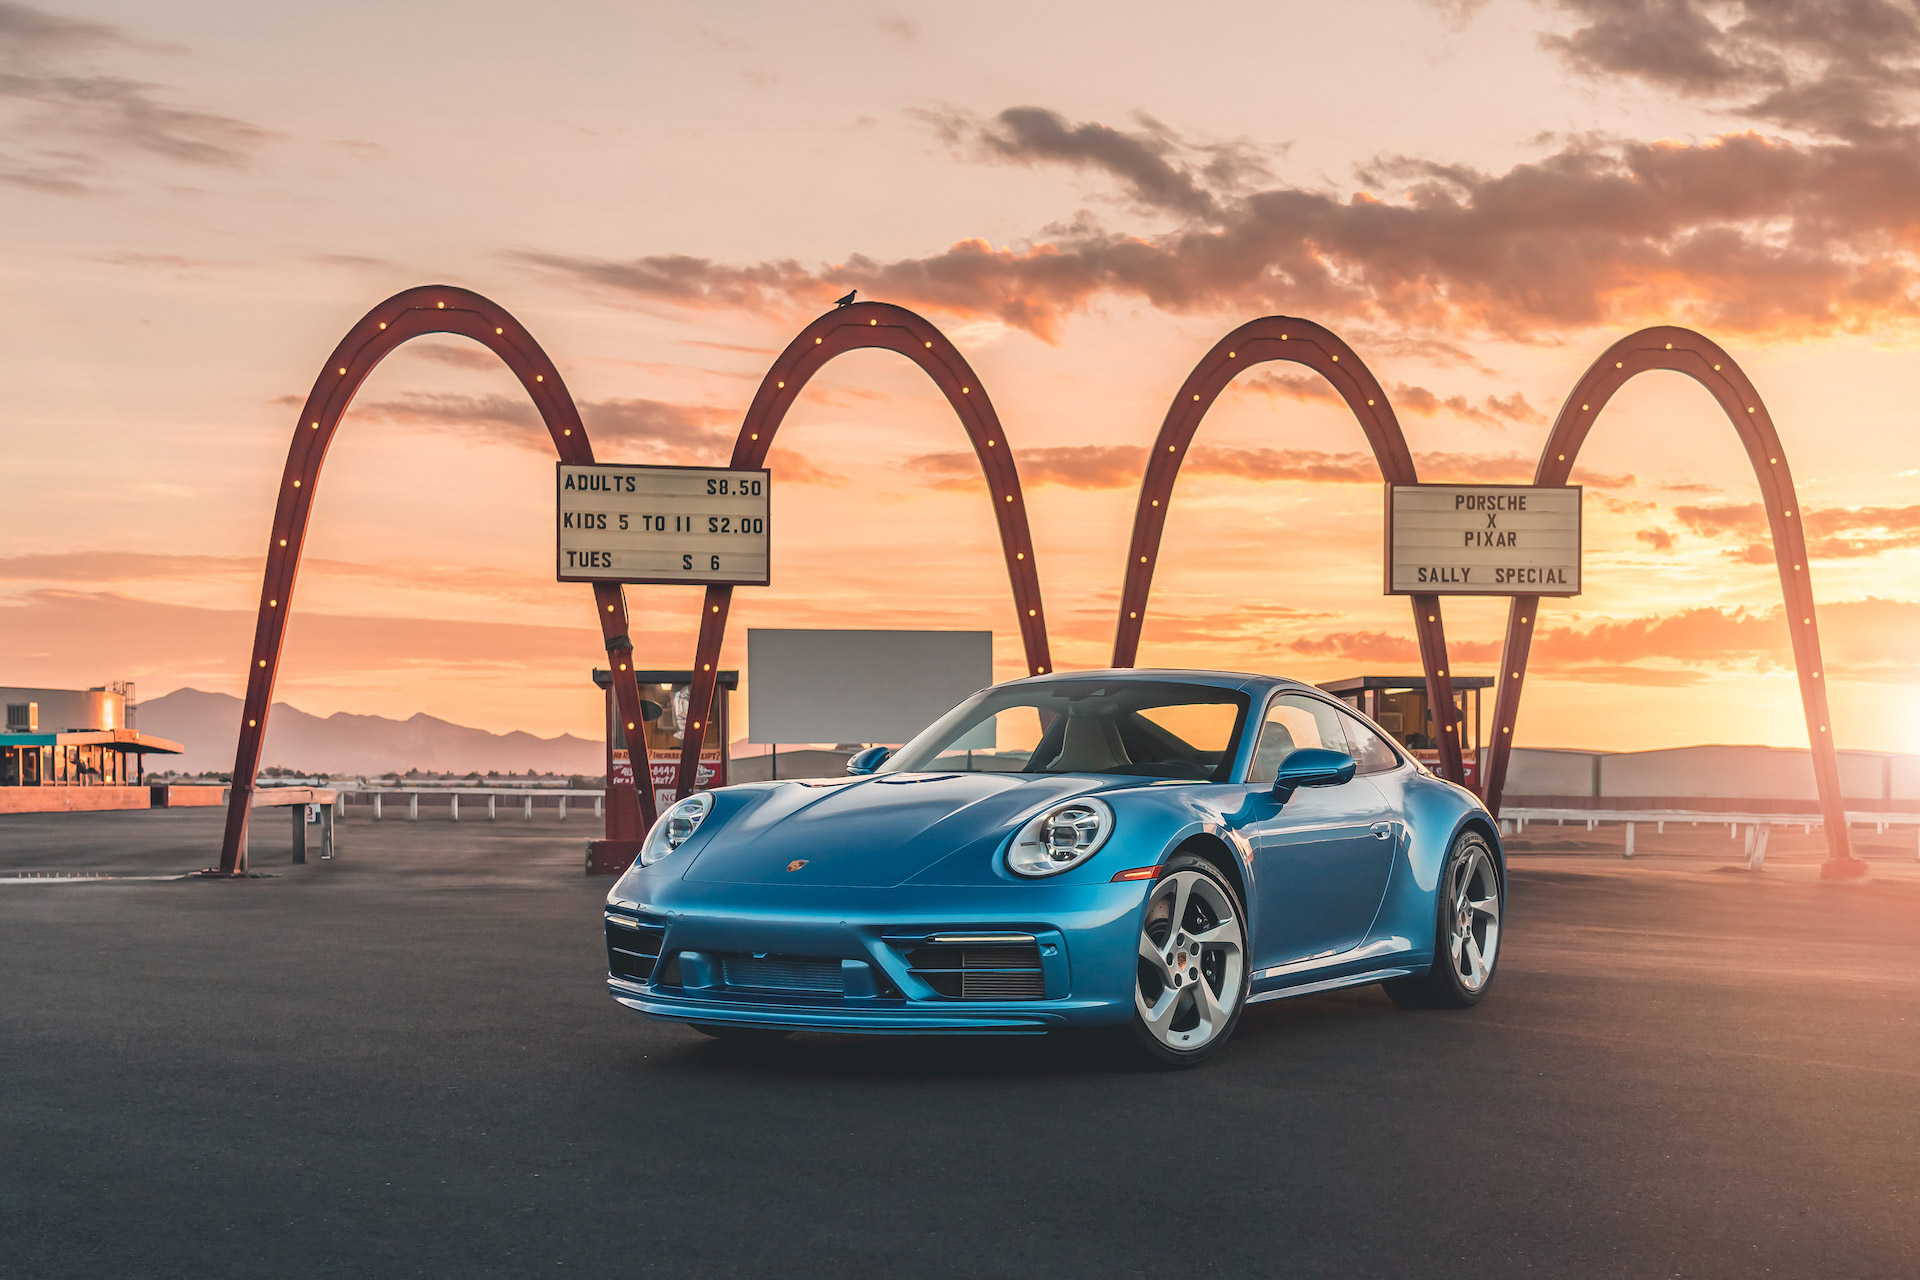 2022-Porsche-911-Sally-Special-Pixar-Cars-00030.jpg